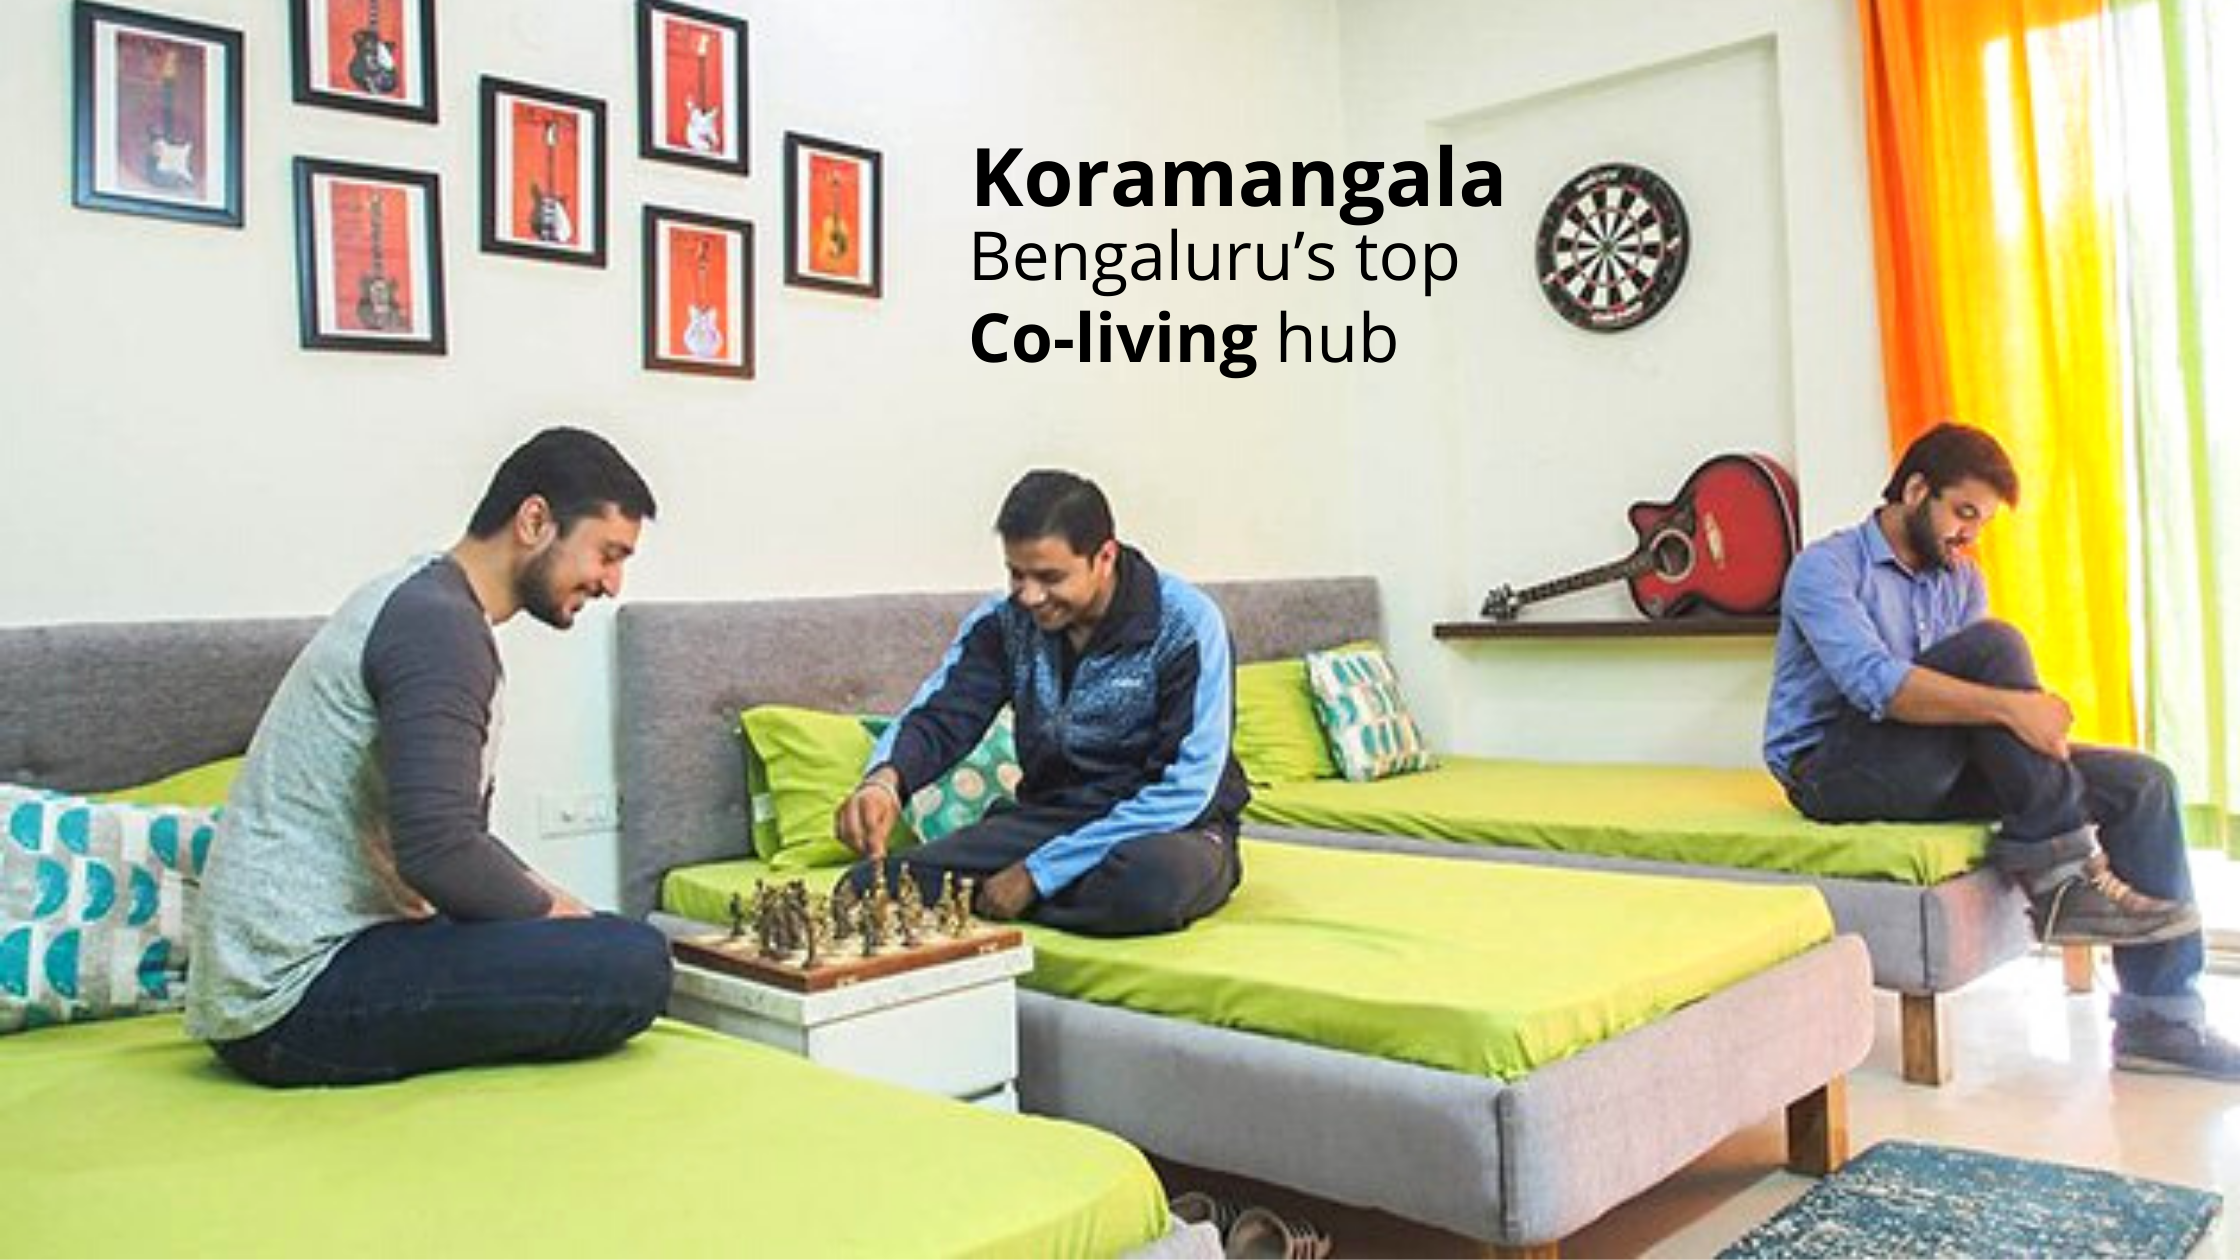 Charismatic Koramangala, Bengaluru’s top co-living hub